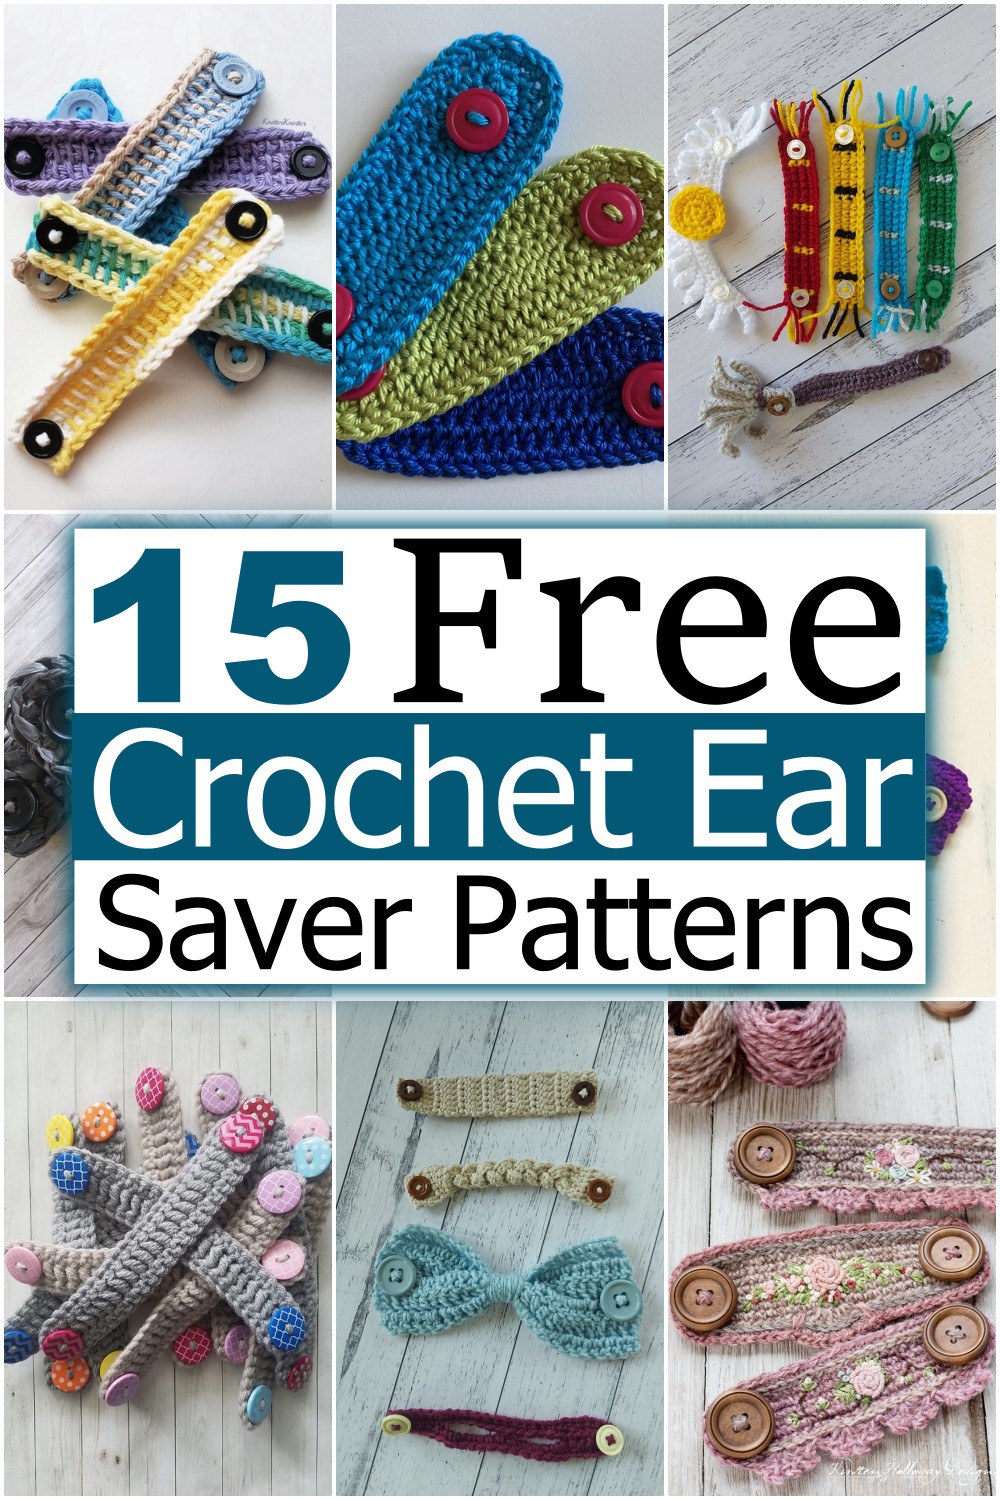 Crochet Ear Saver Patterns